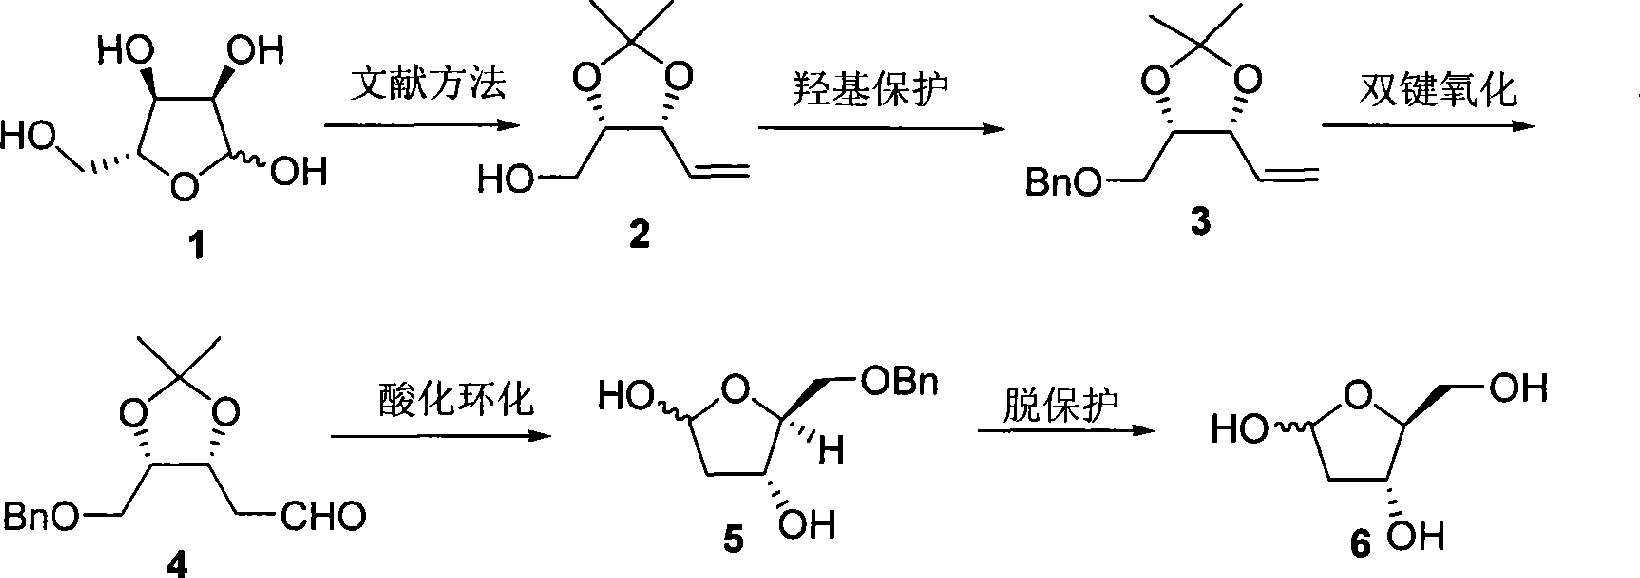 Method of preparing 2-deoxy-L-ribose